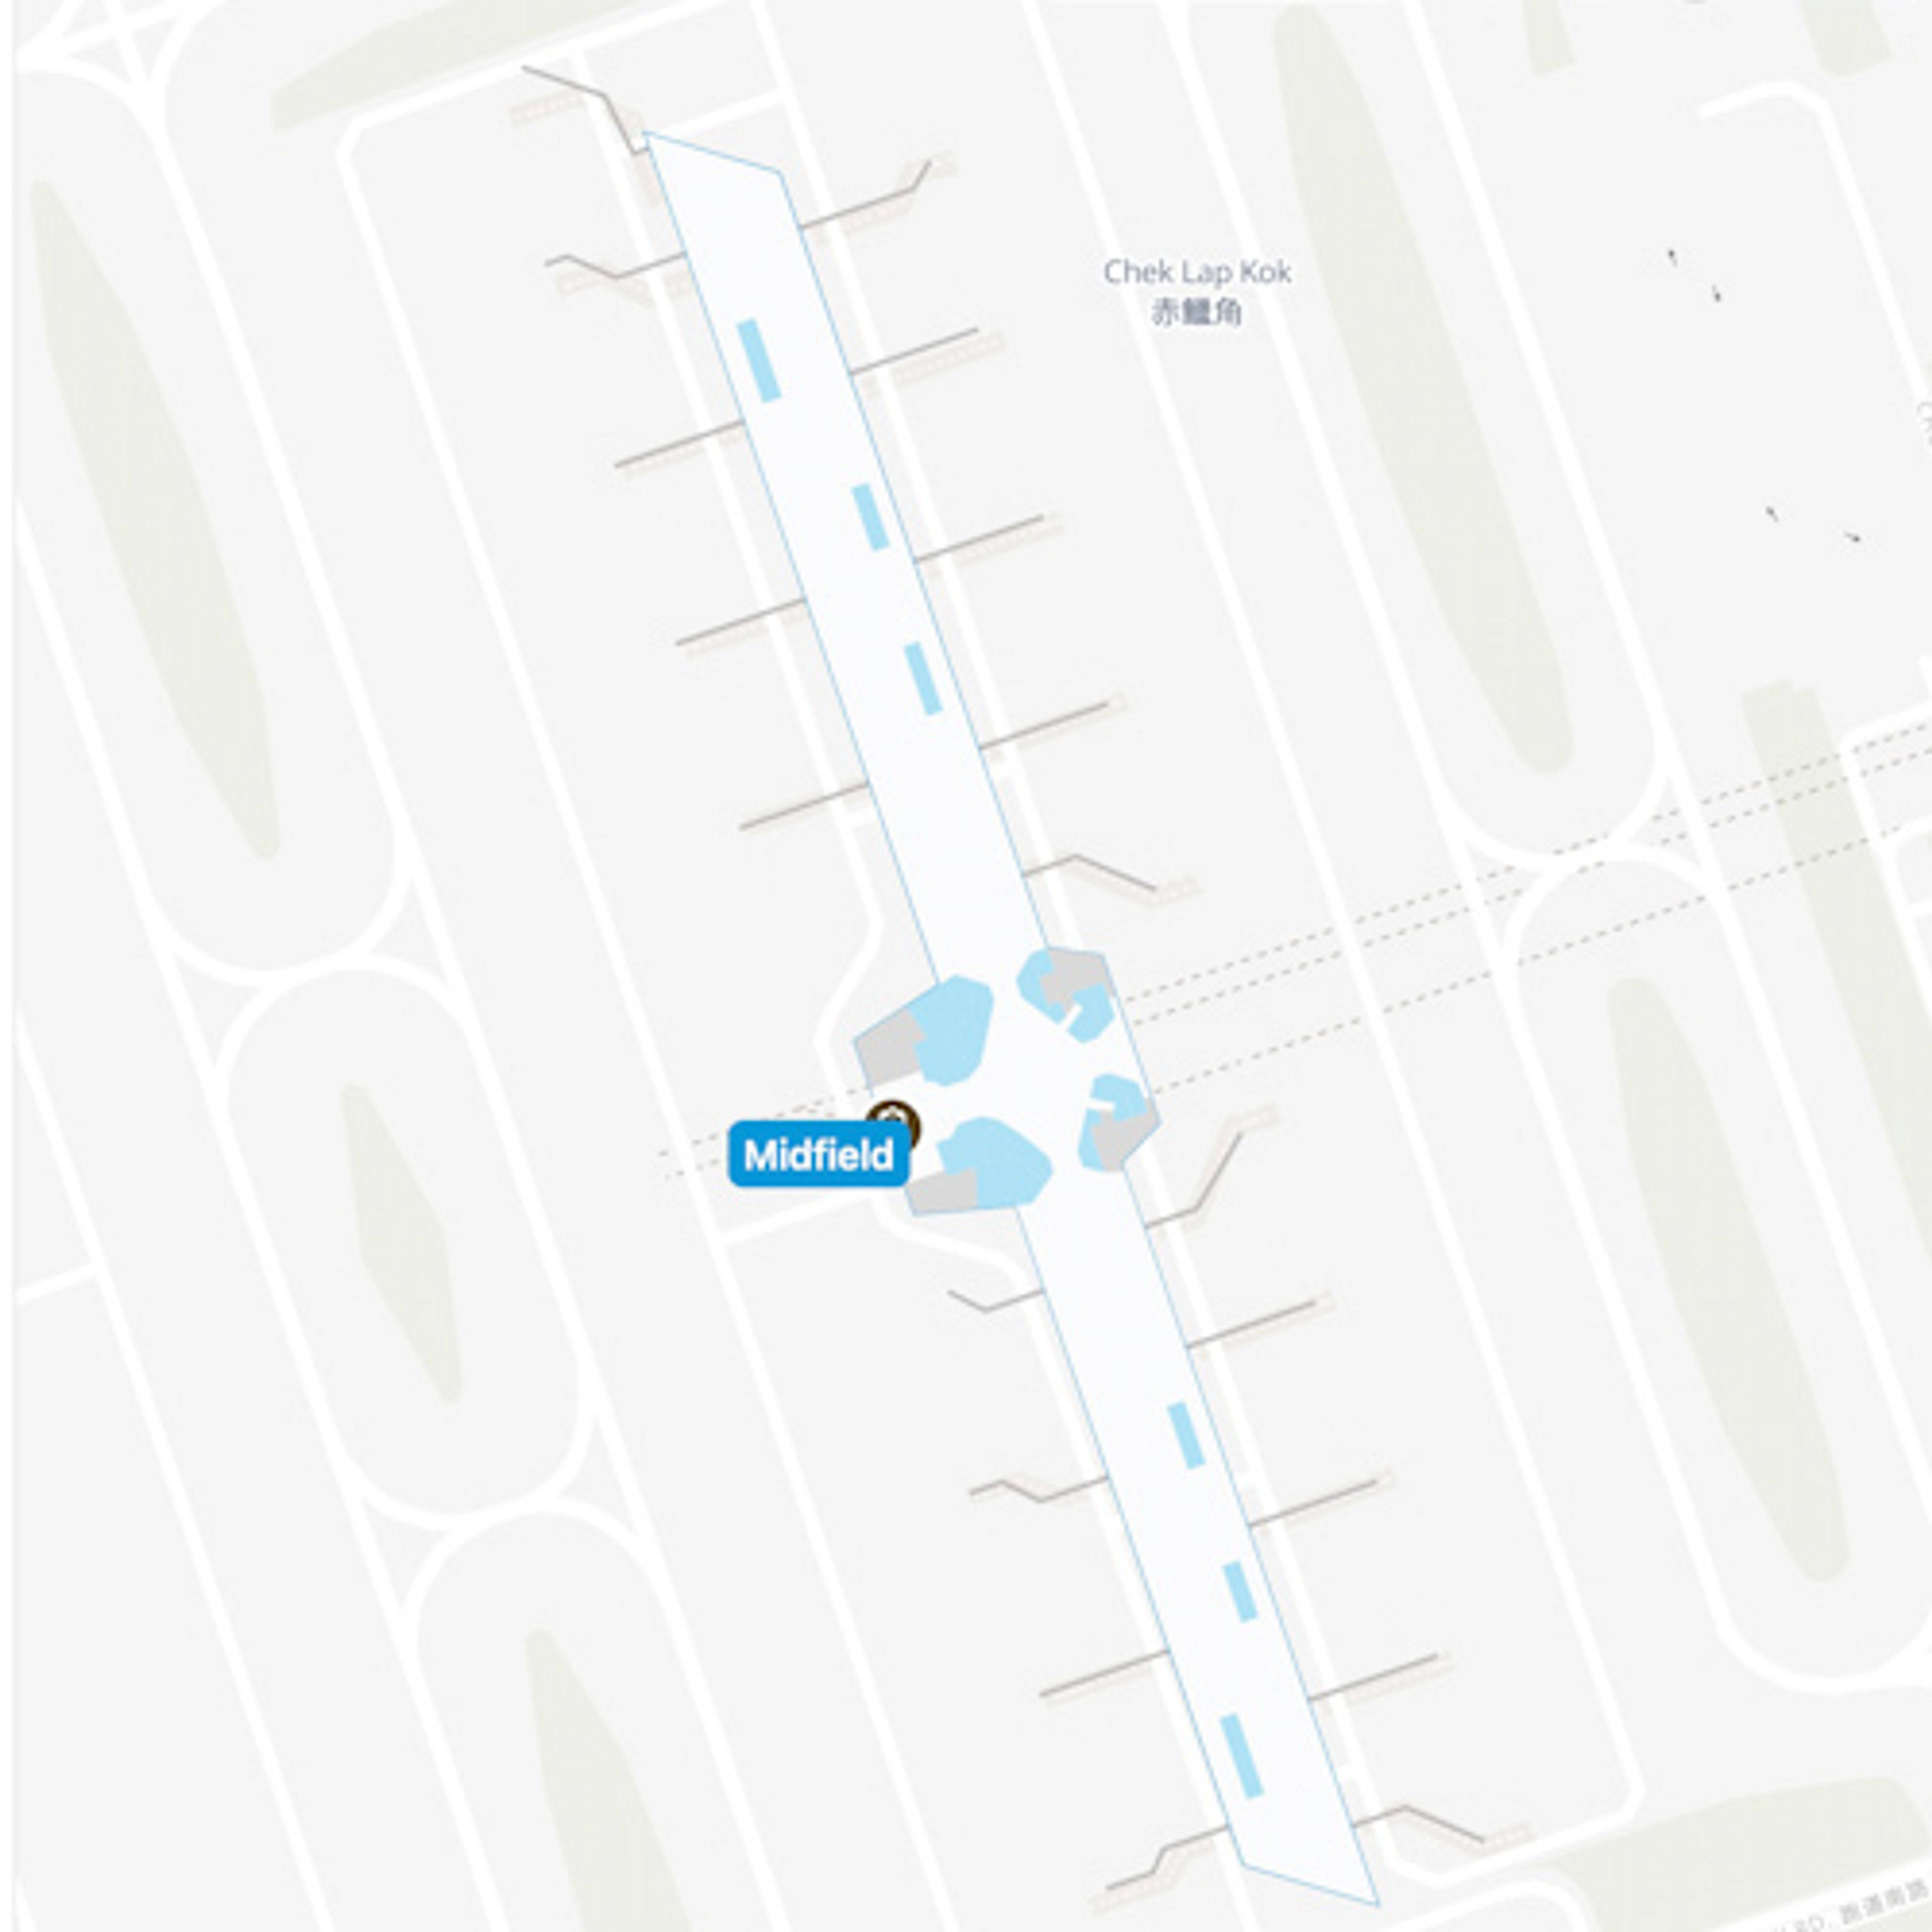 HKG Midfield Concourse Map